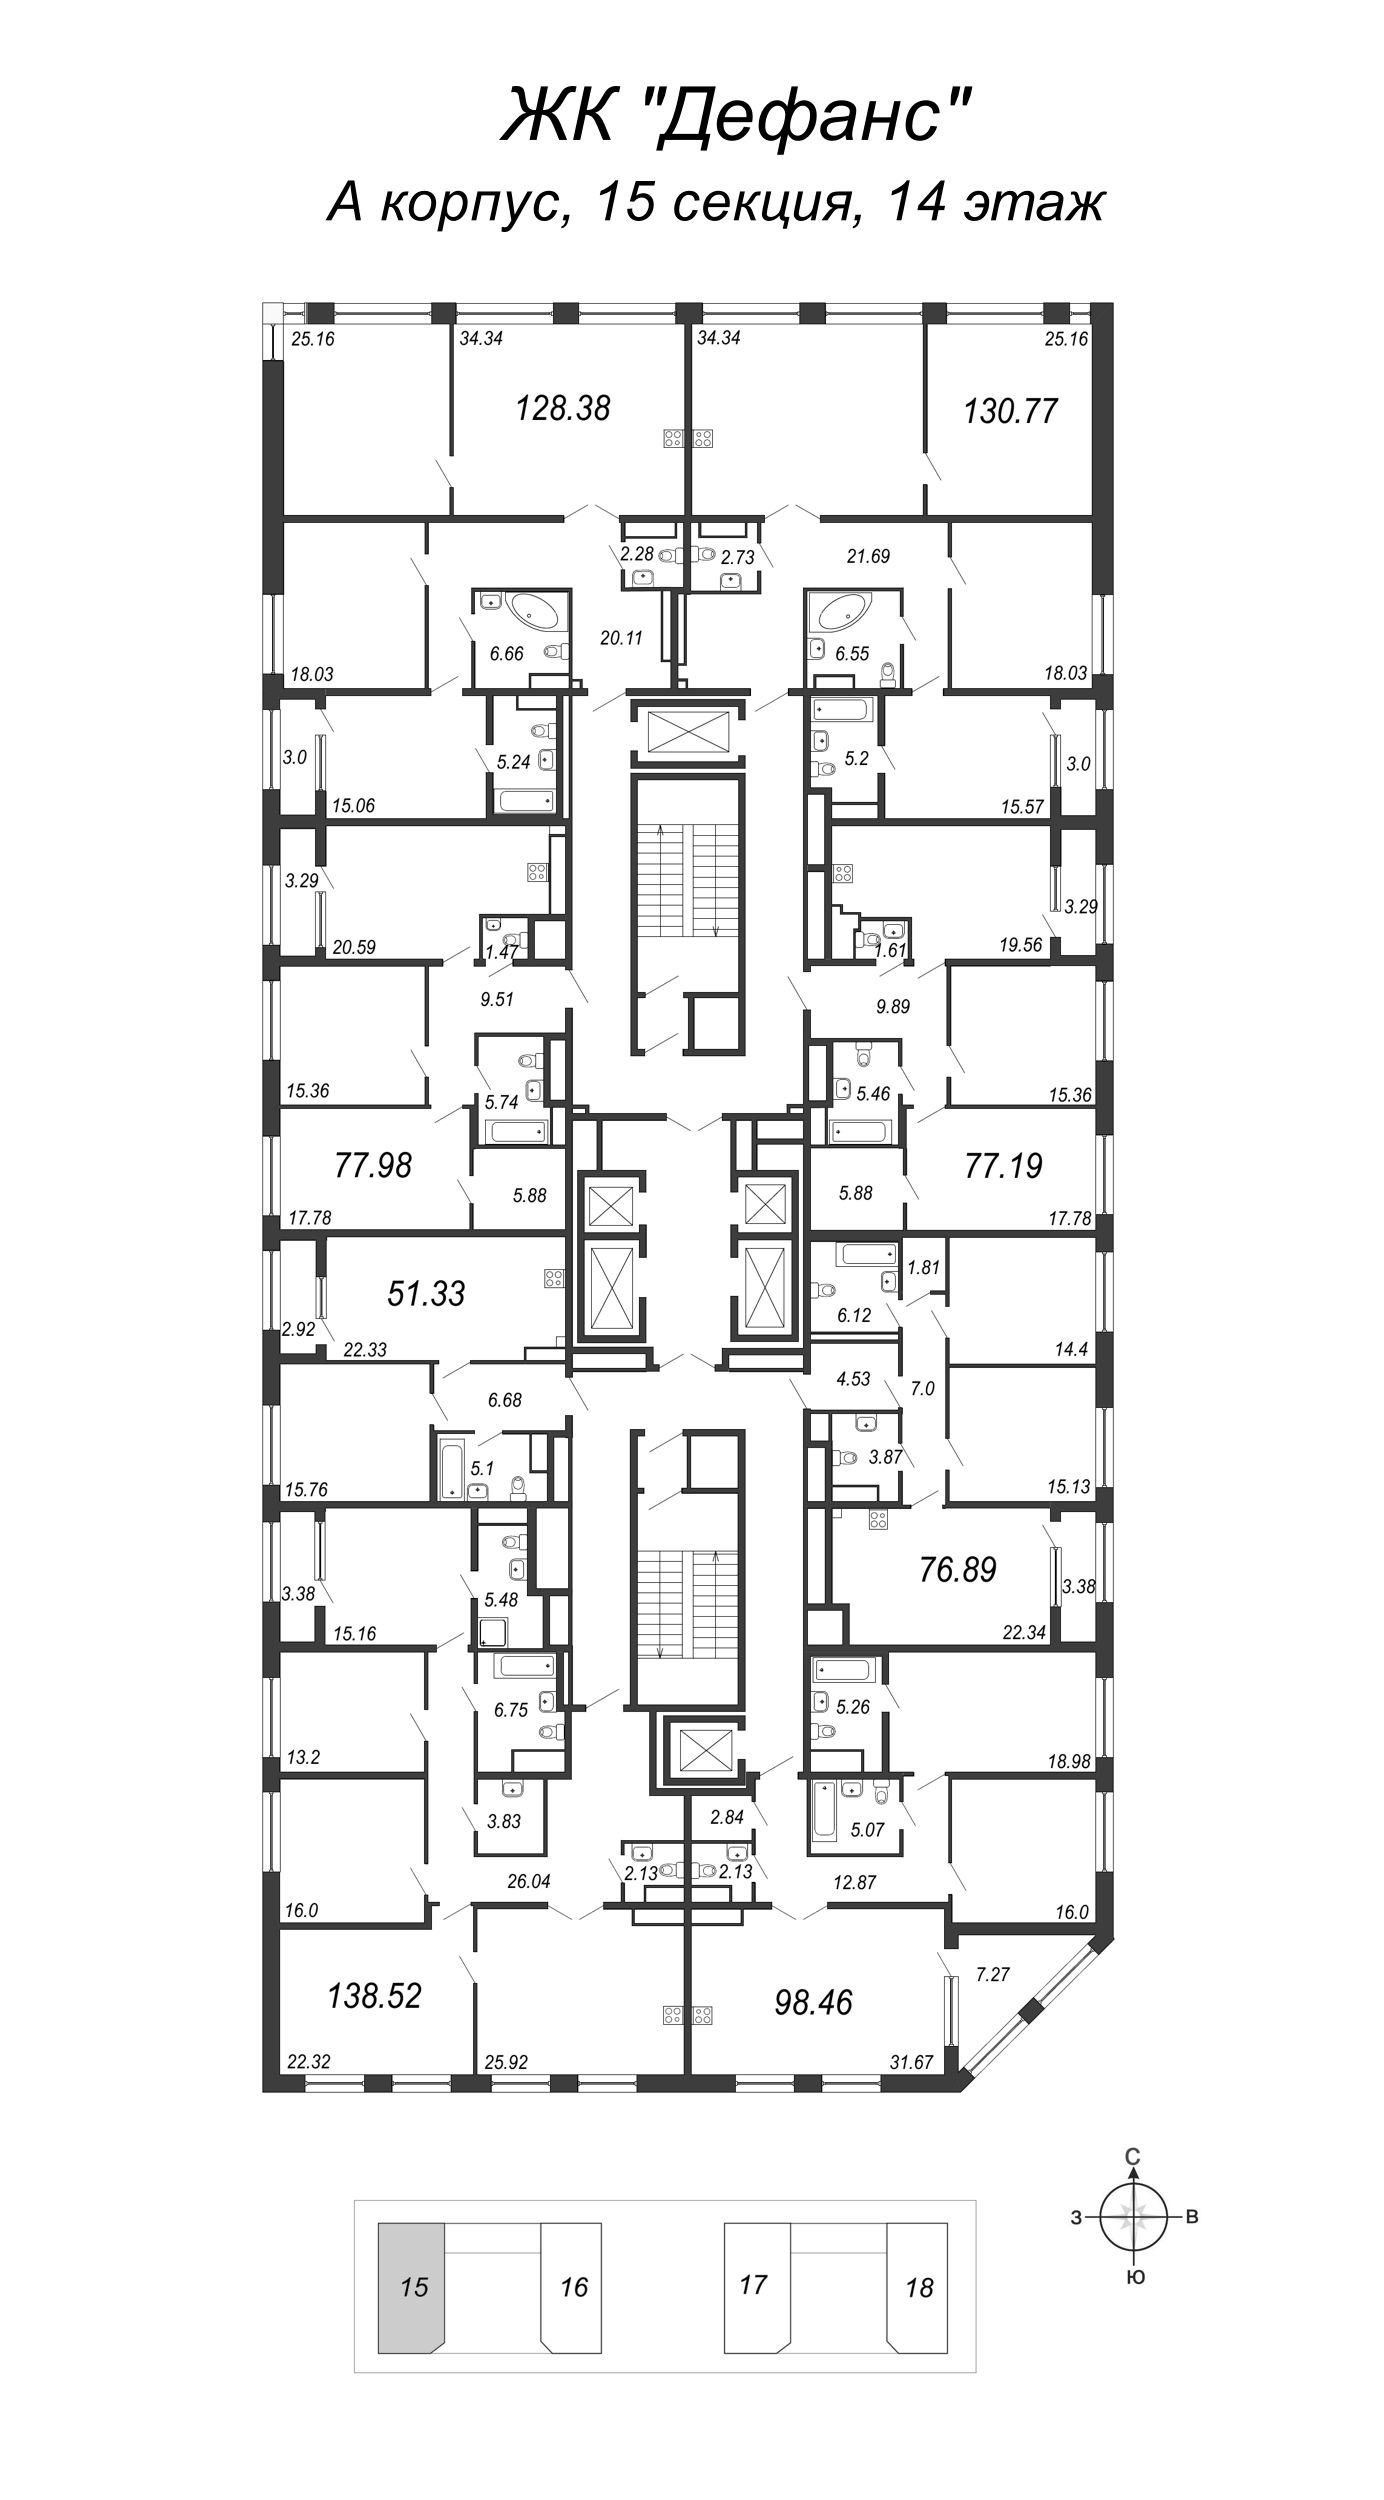 4-комнатная (Евро) квартира, 130.77 м² - планировка этажа